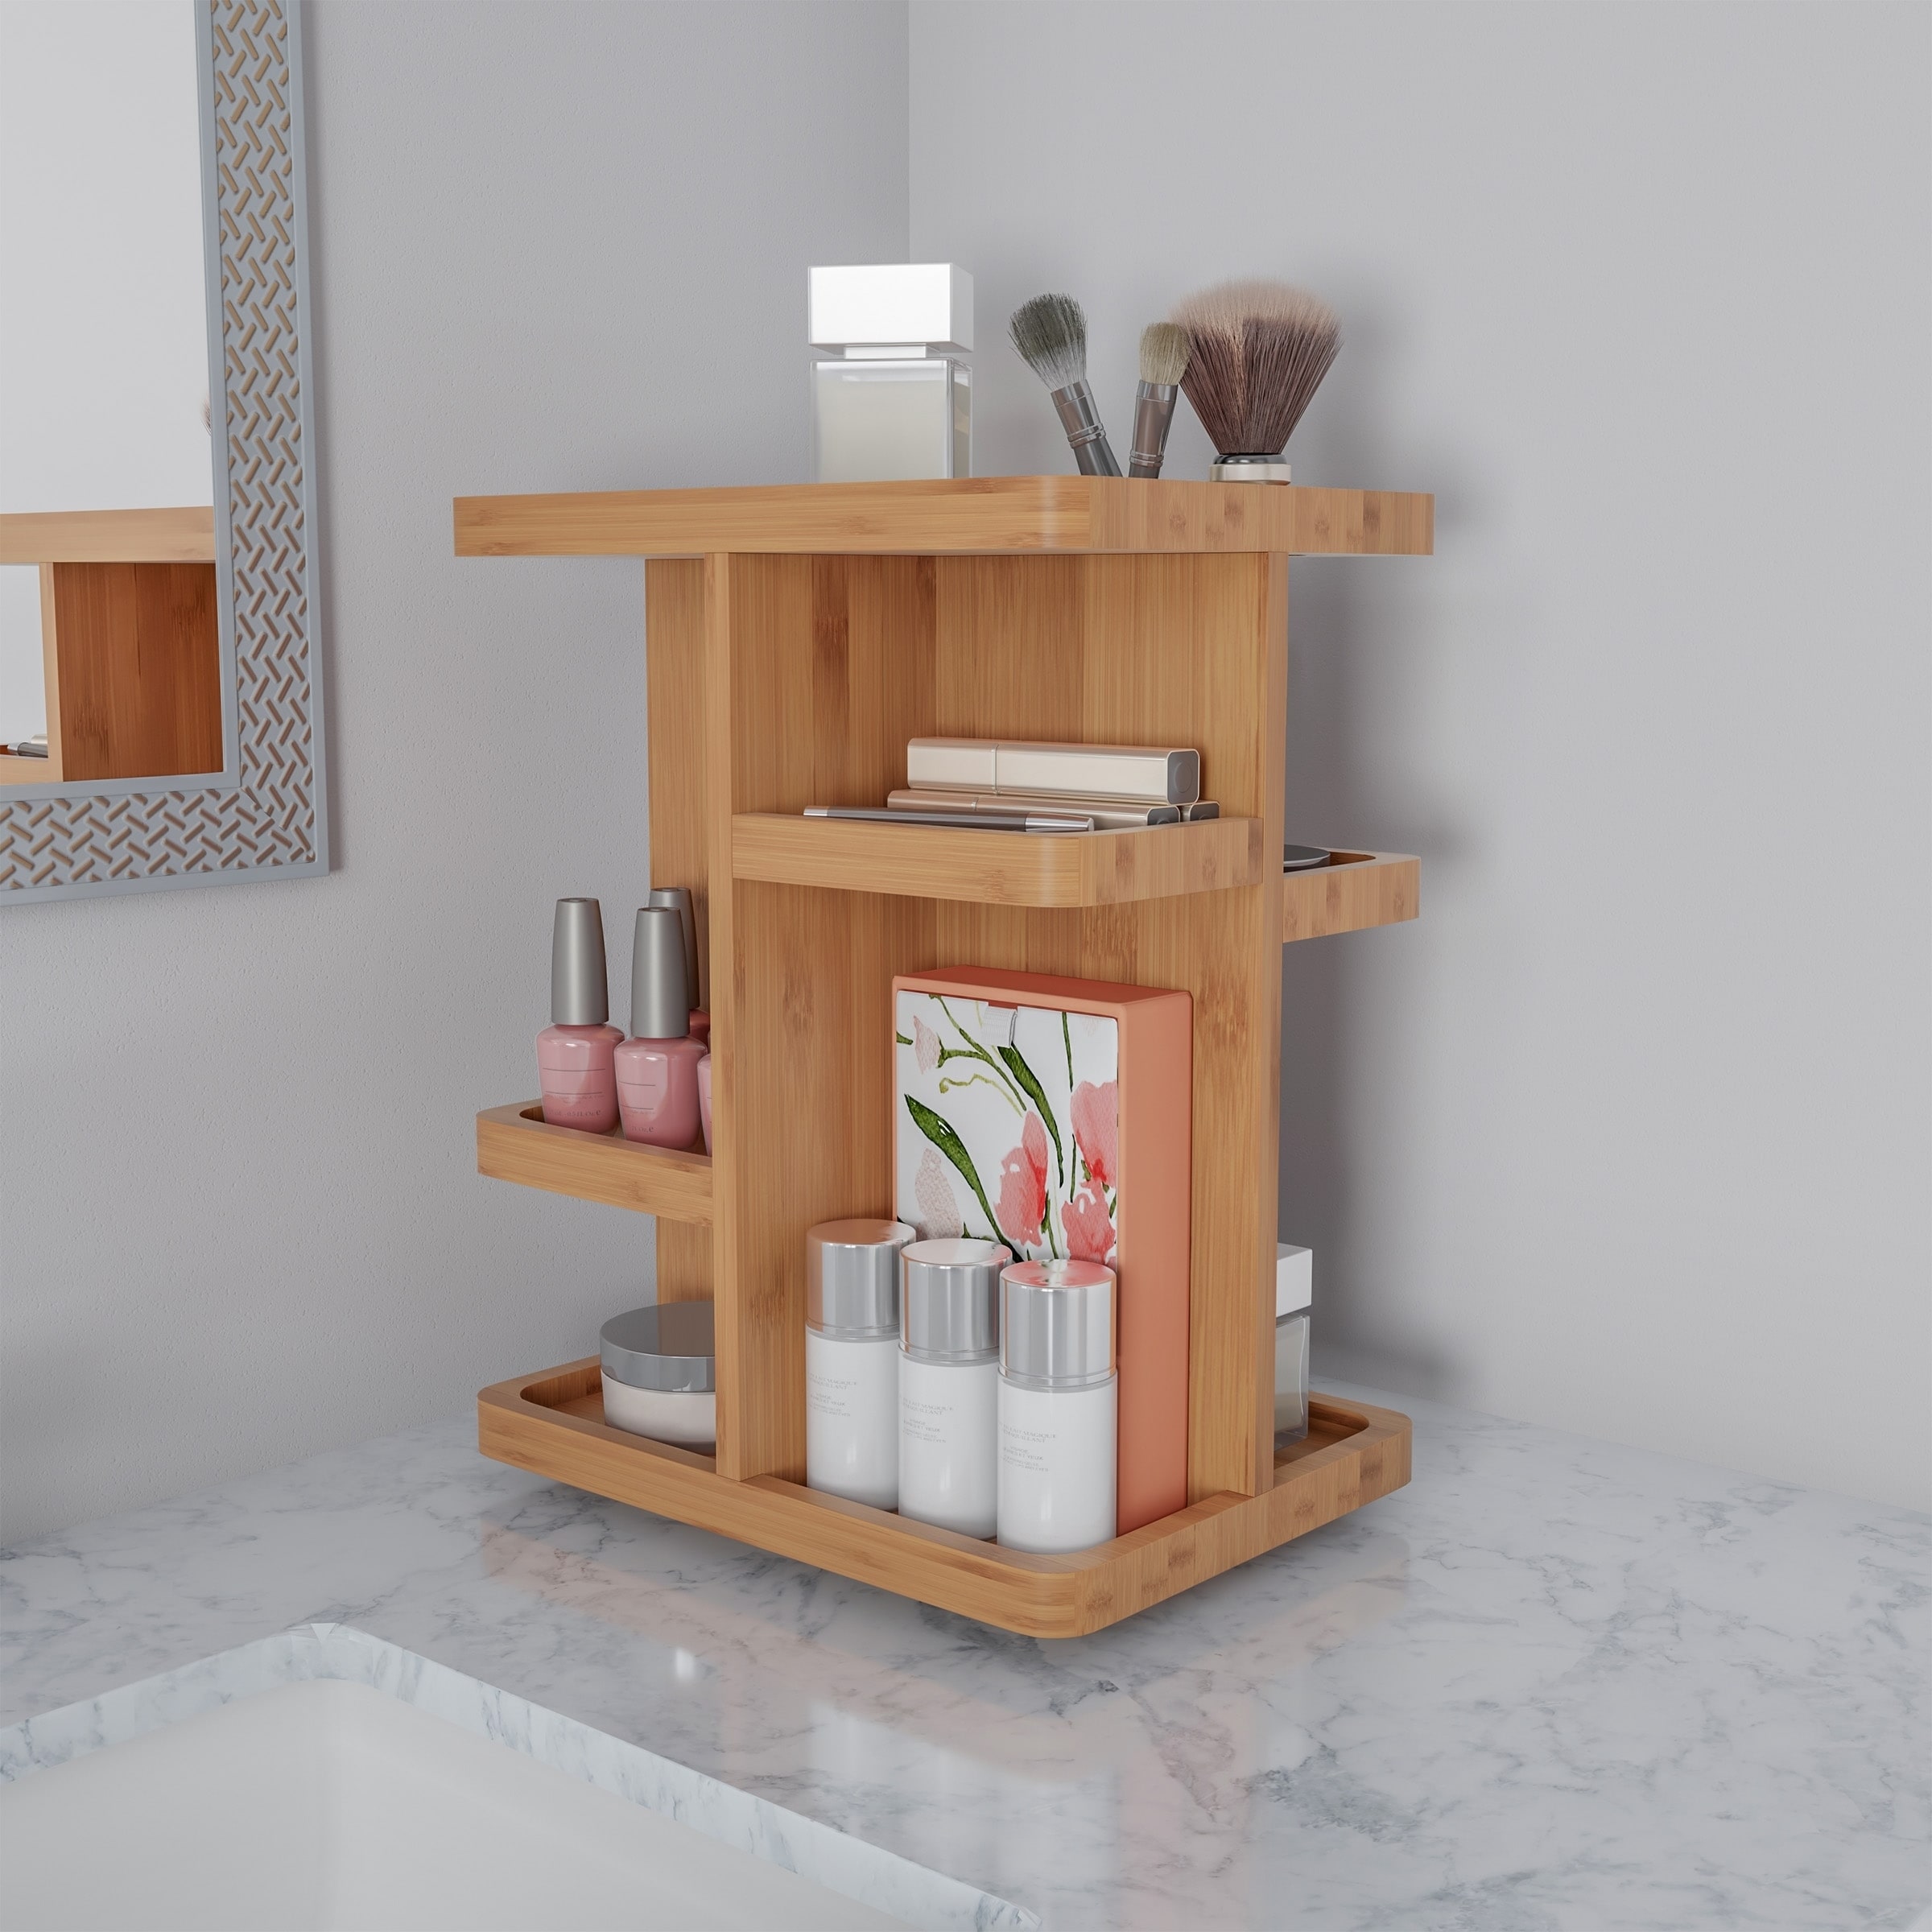 Countertop Makeup Organizer Shelf, 2 Tier Cosmetic Storage Basket with  Removable Glass Tray, Wire Vanity Organizer Rack for Dresser, Bathroom